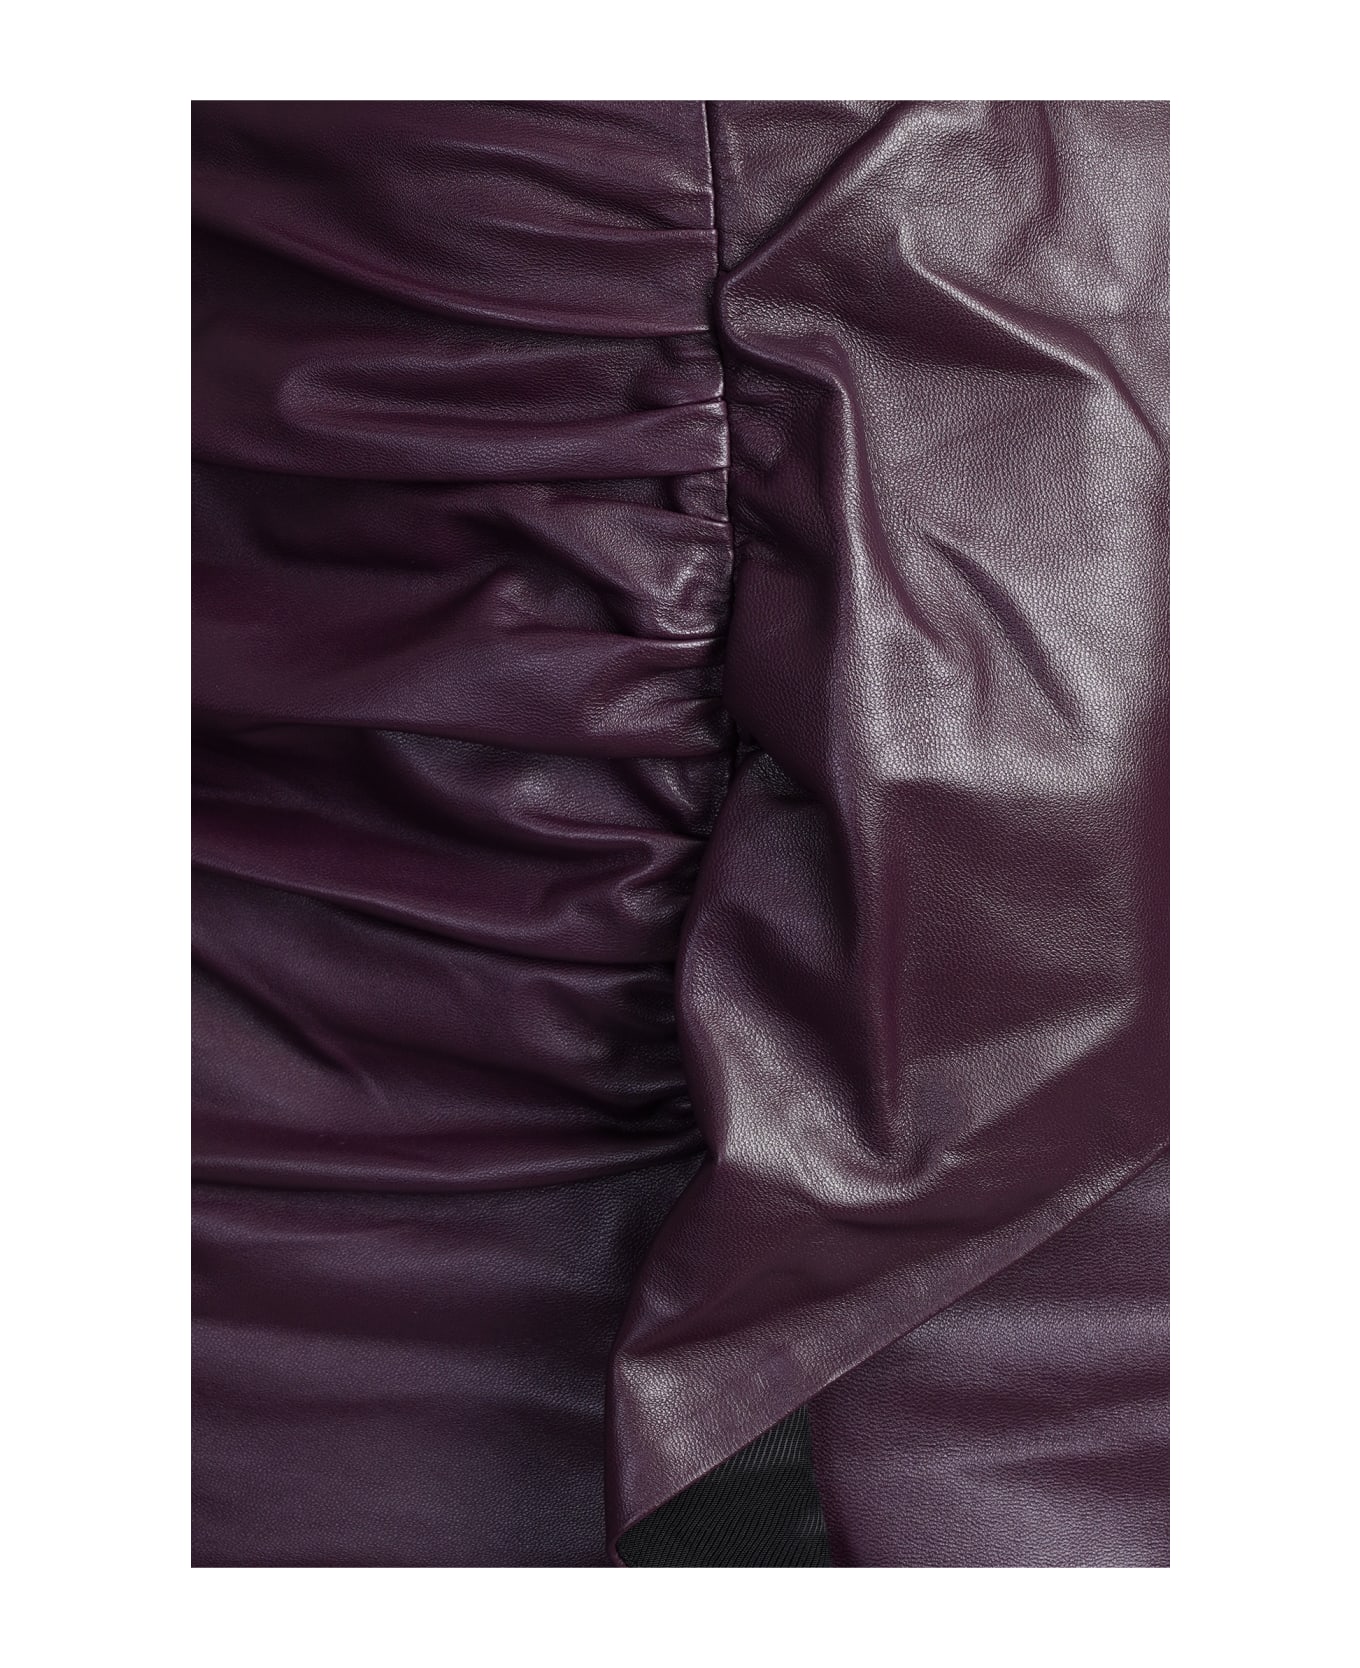 IRO Hita Skirt In Bordeaux Leather - bordeaux